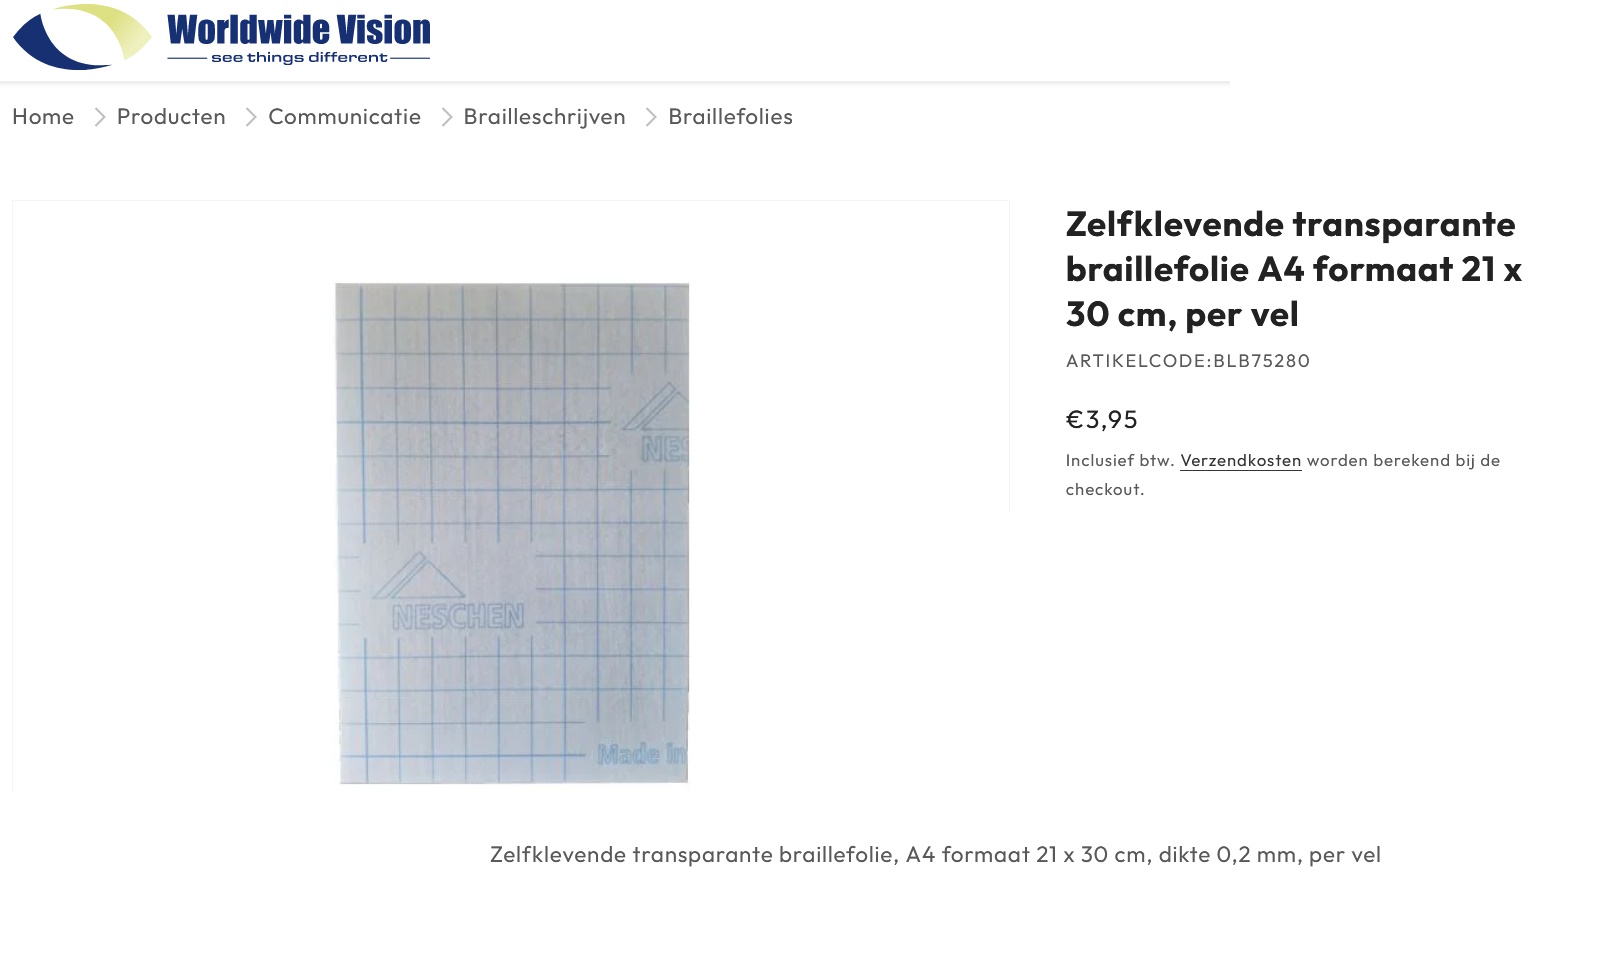 toegevoegd document 2 van Zelfklevende transparante braillefolie 170501 